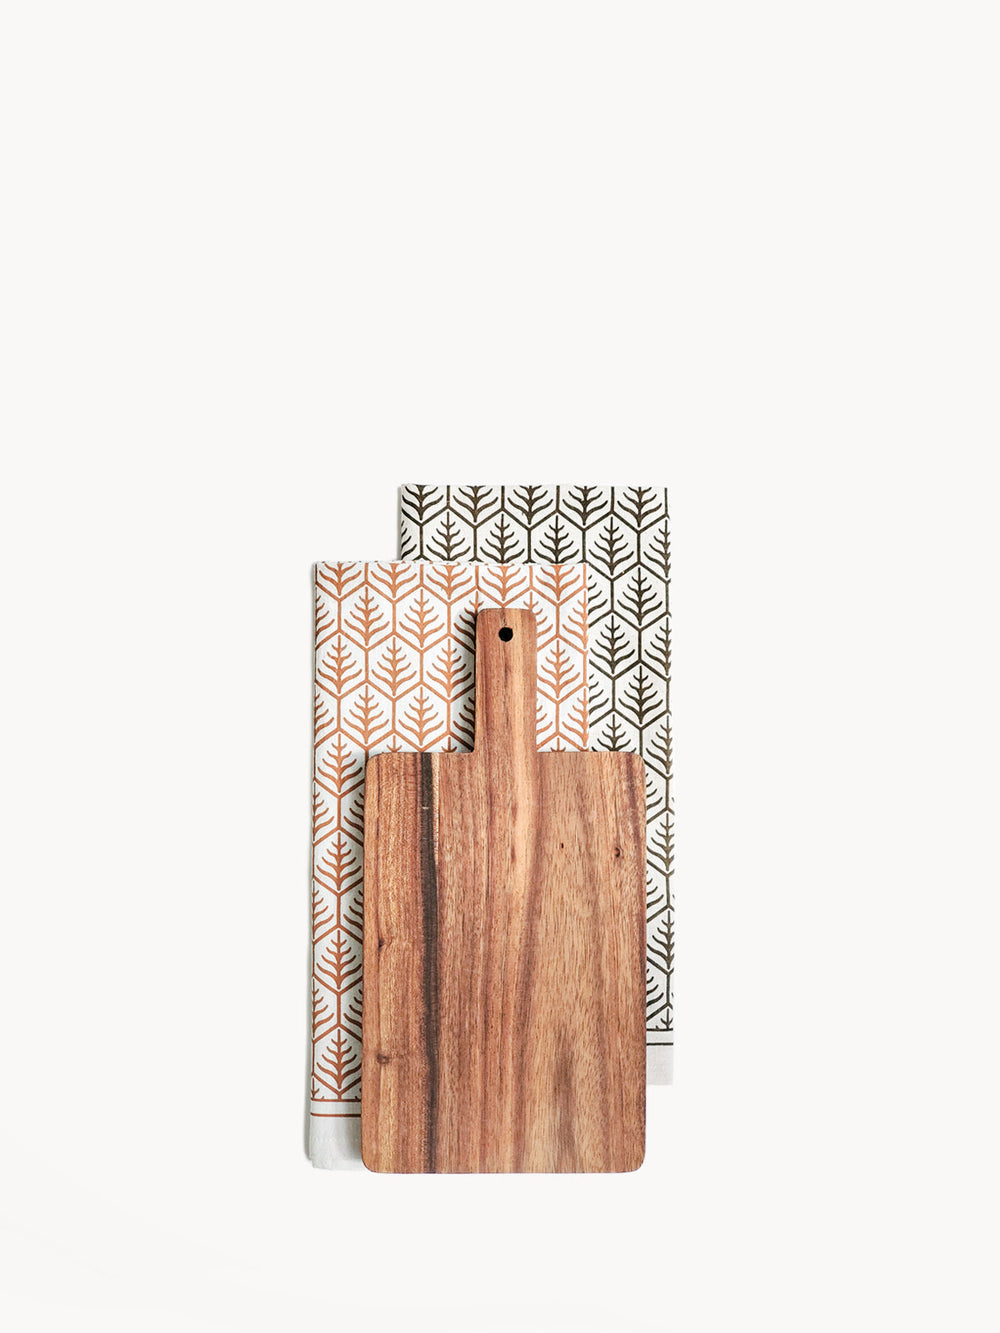 Wooden Serving Board Gift Set - Small by KORISSA